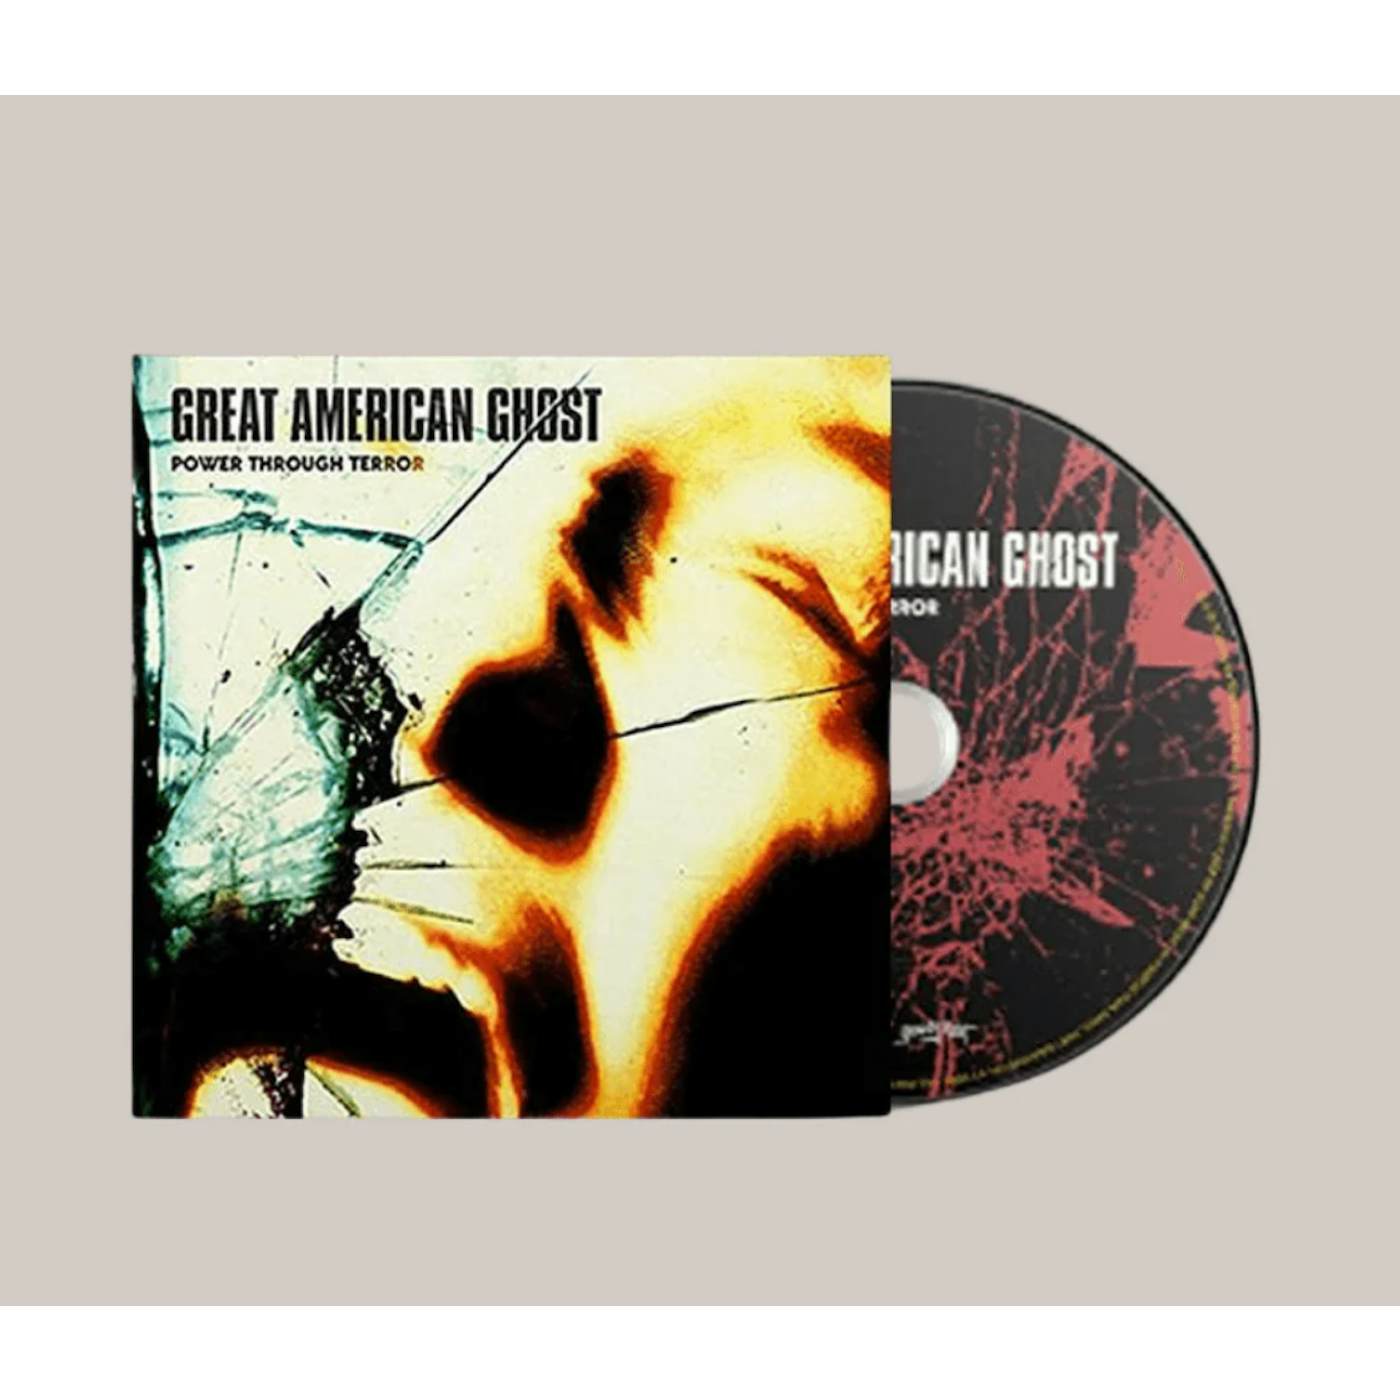 Great American Ghost "Power Through Terror" CD